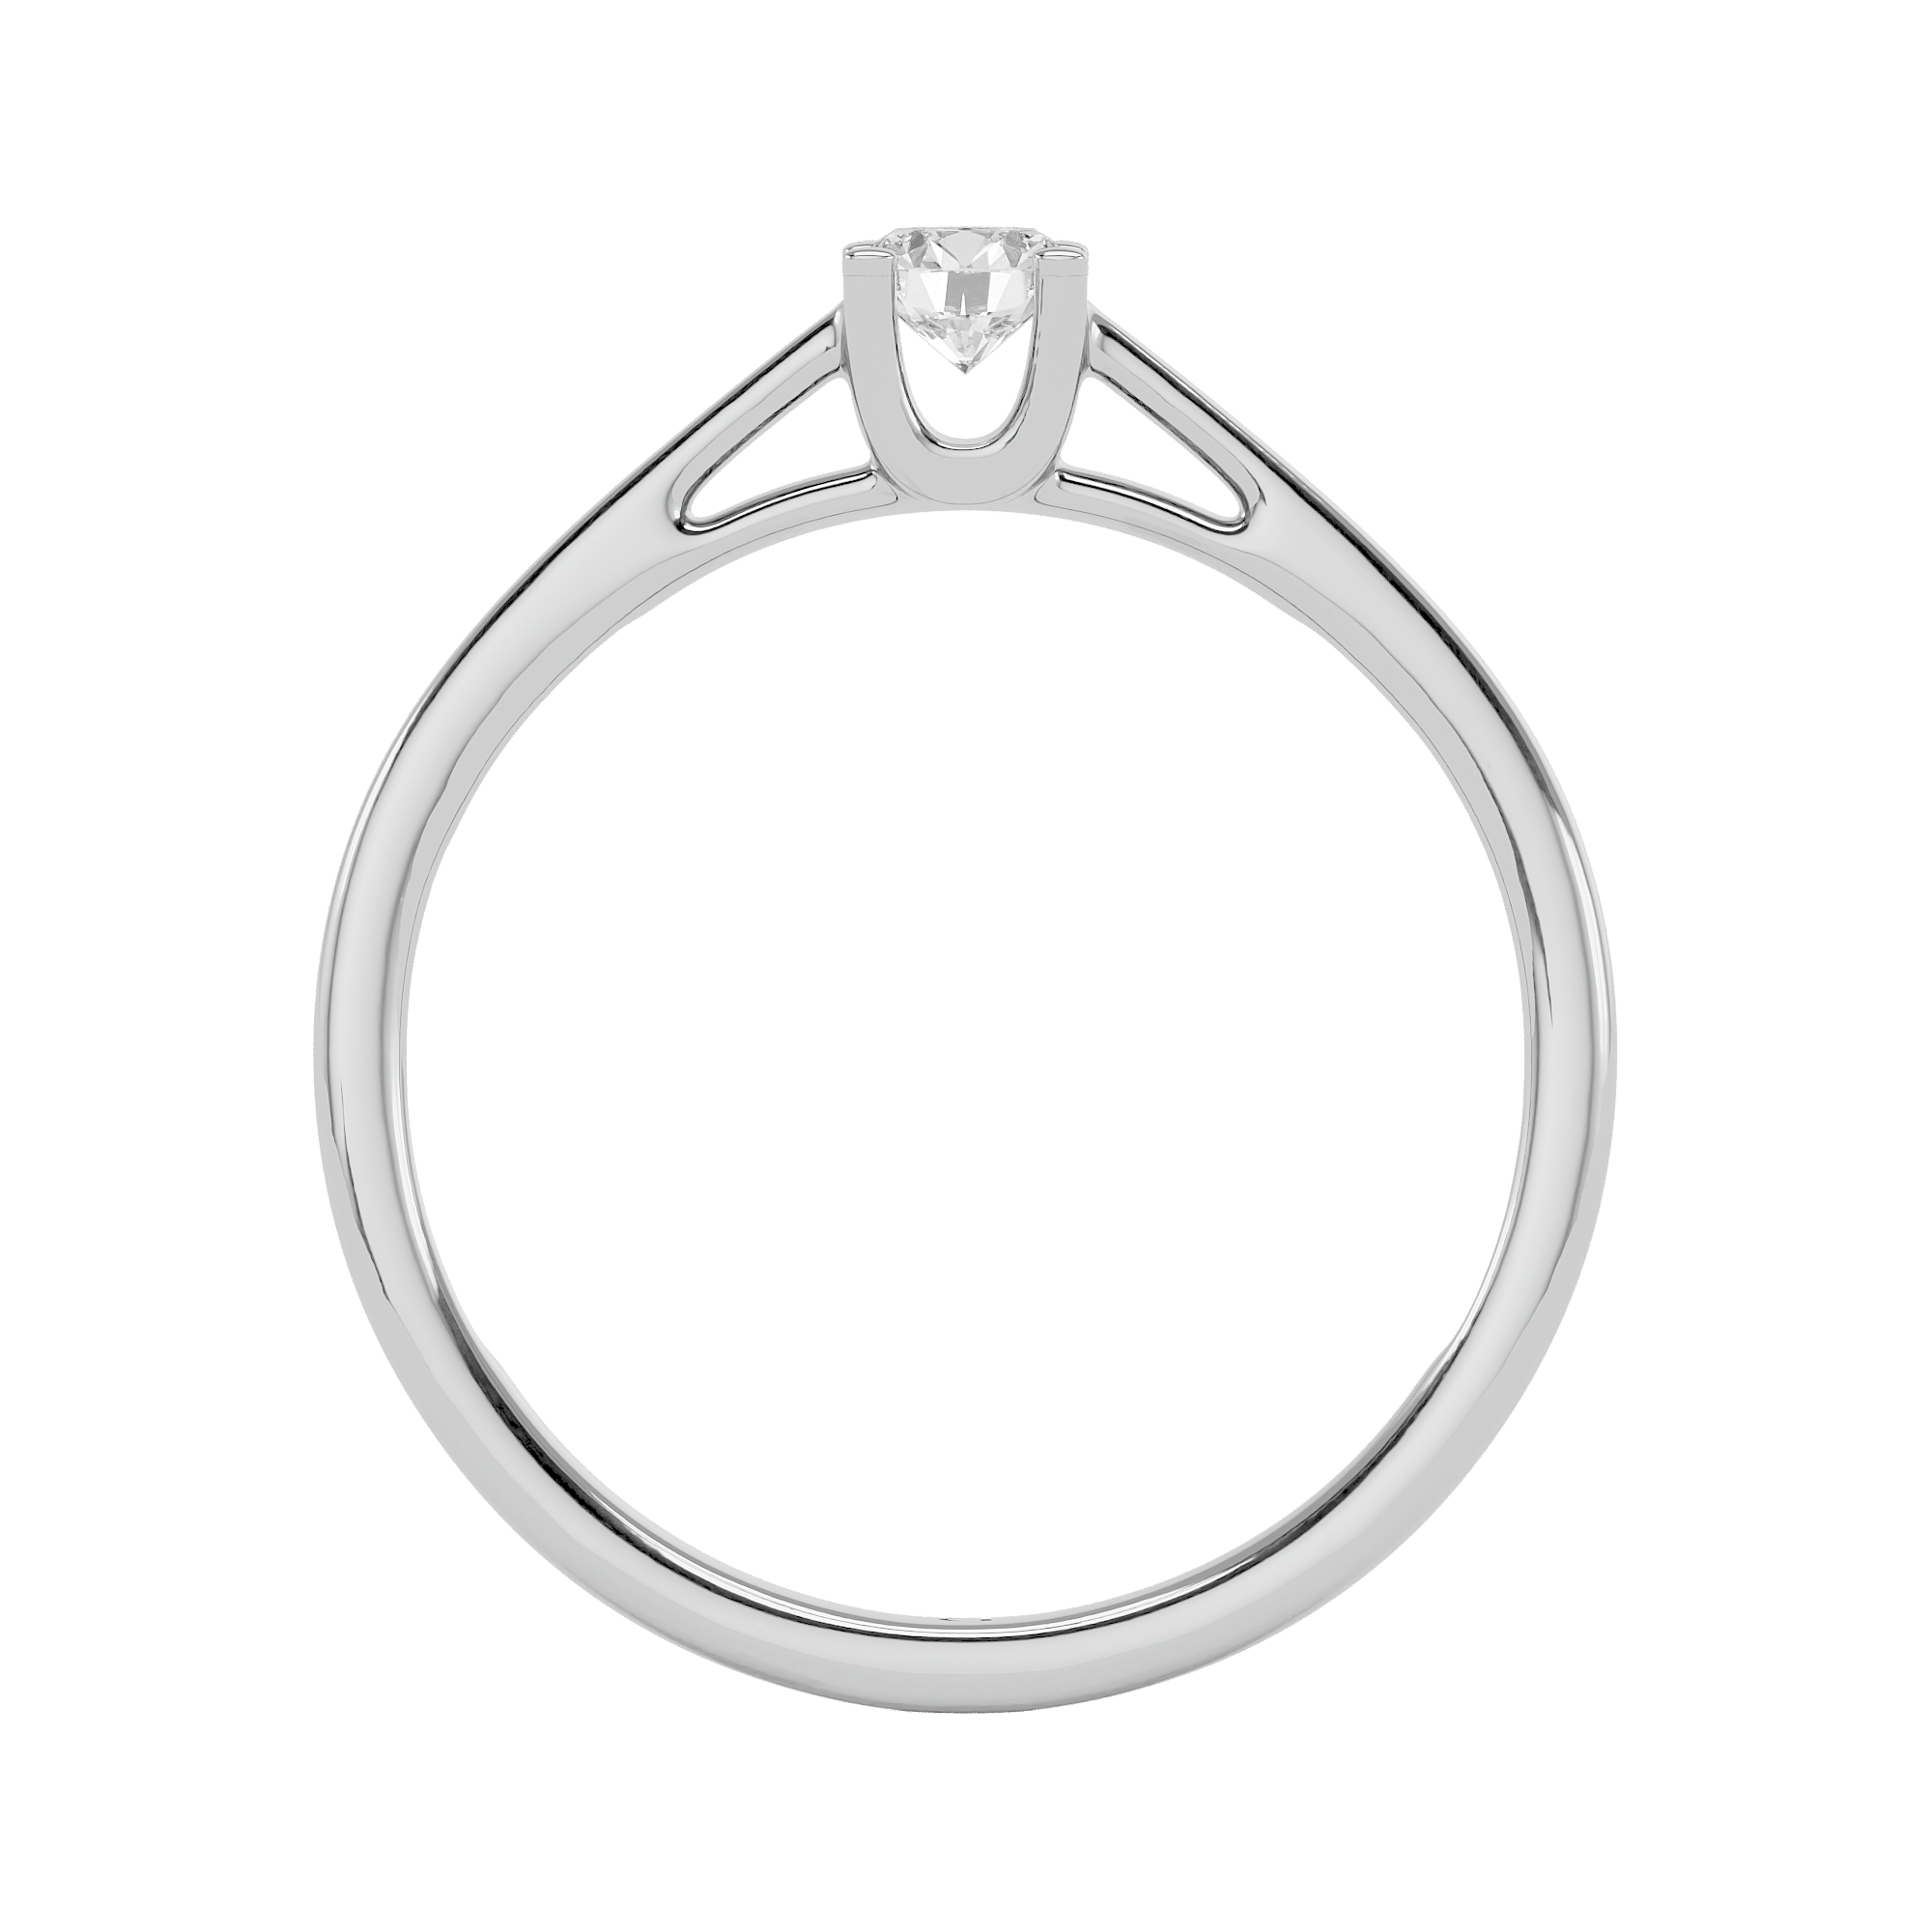 Round cut lab grown diamond ring in white gold by Blu Diamonds